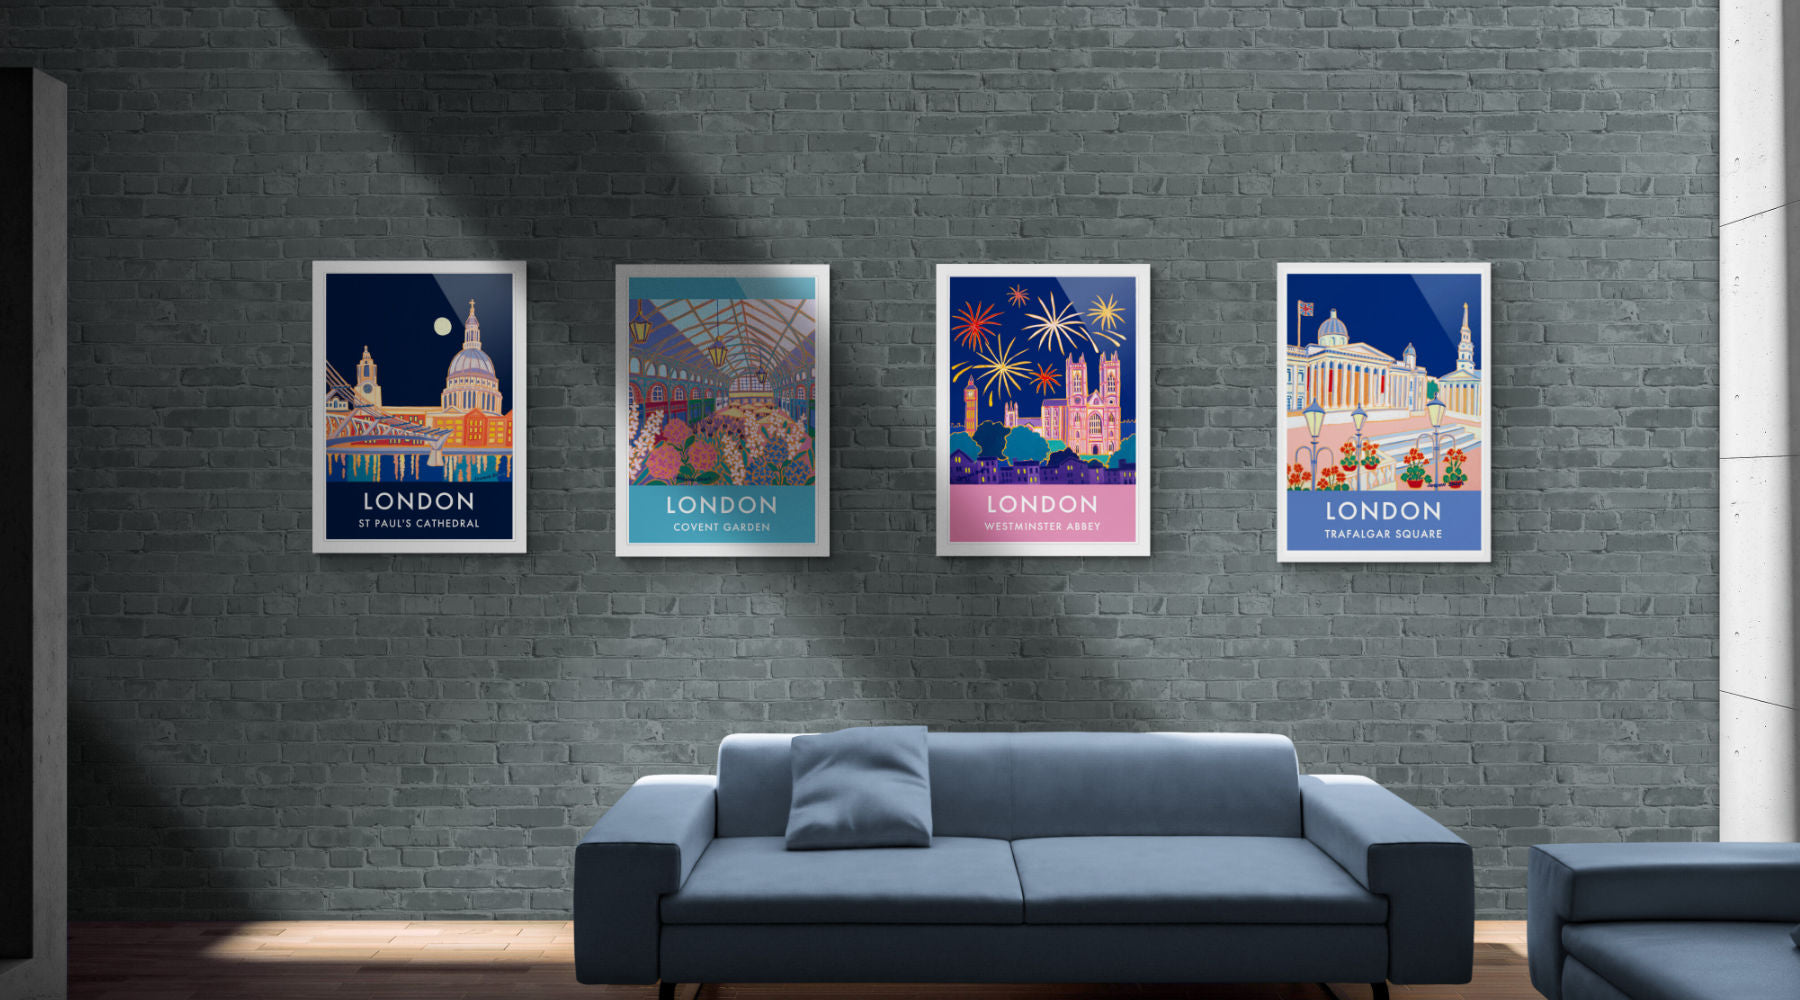 London Art Prints on a city apartment wall